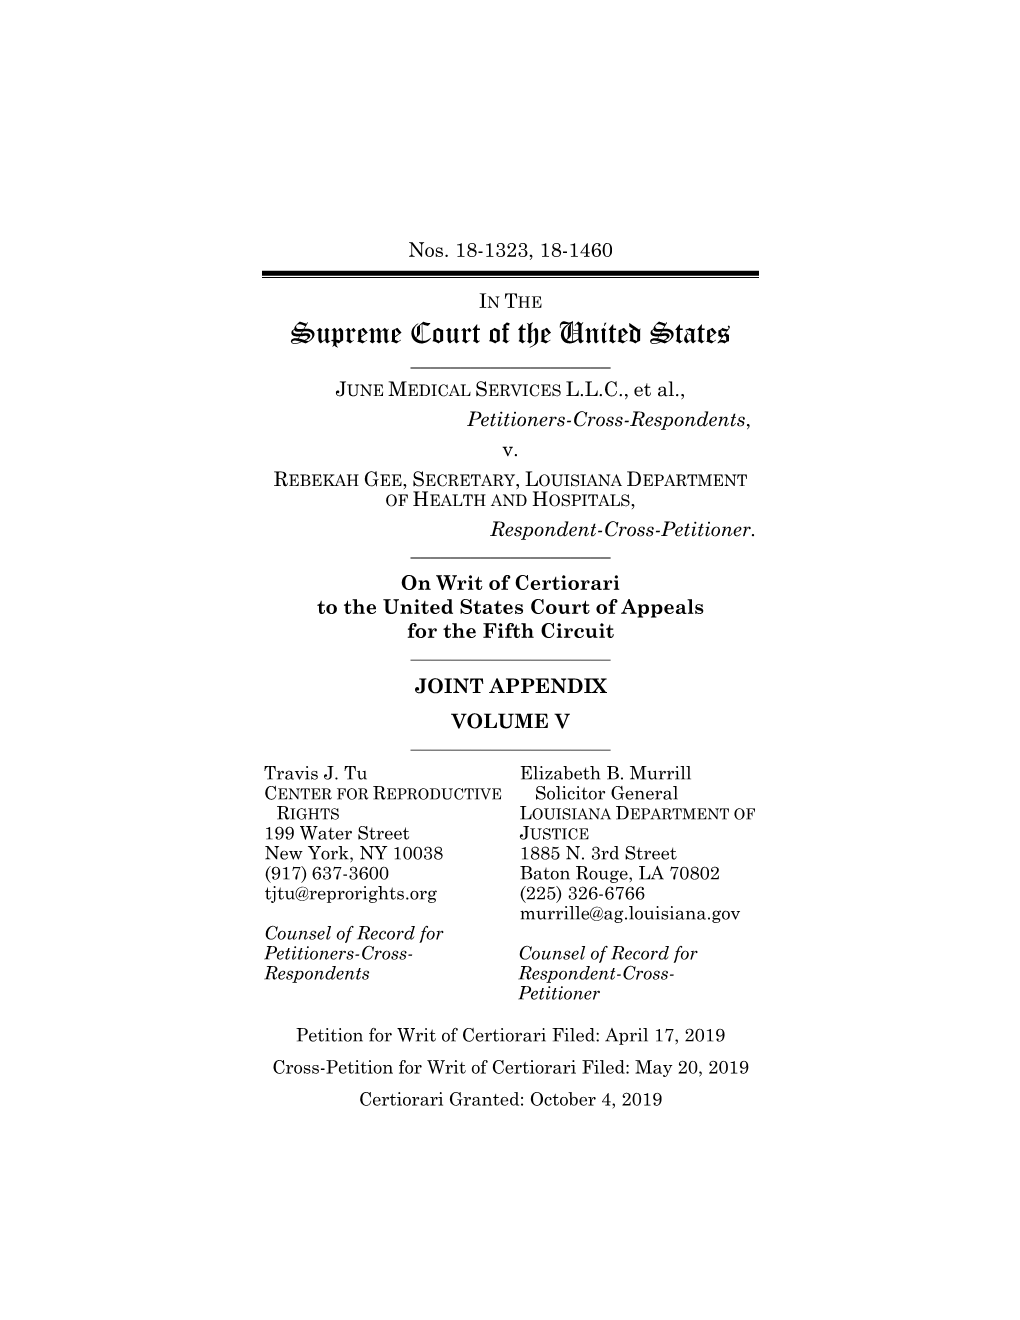 Supreme Court of the United States ______JUNE MEDICAL SERVICES L.L.C., Et Al., Petitioners-Cross-Respondents, V